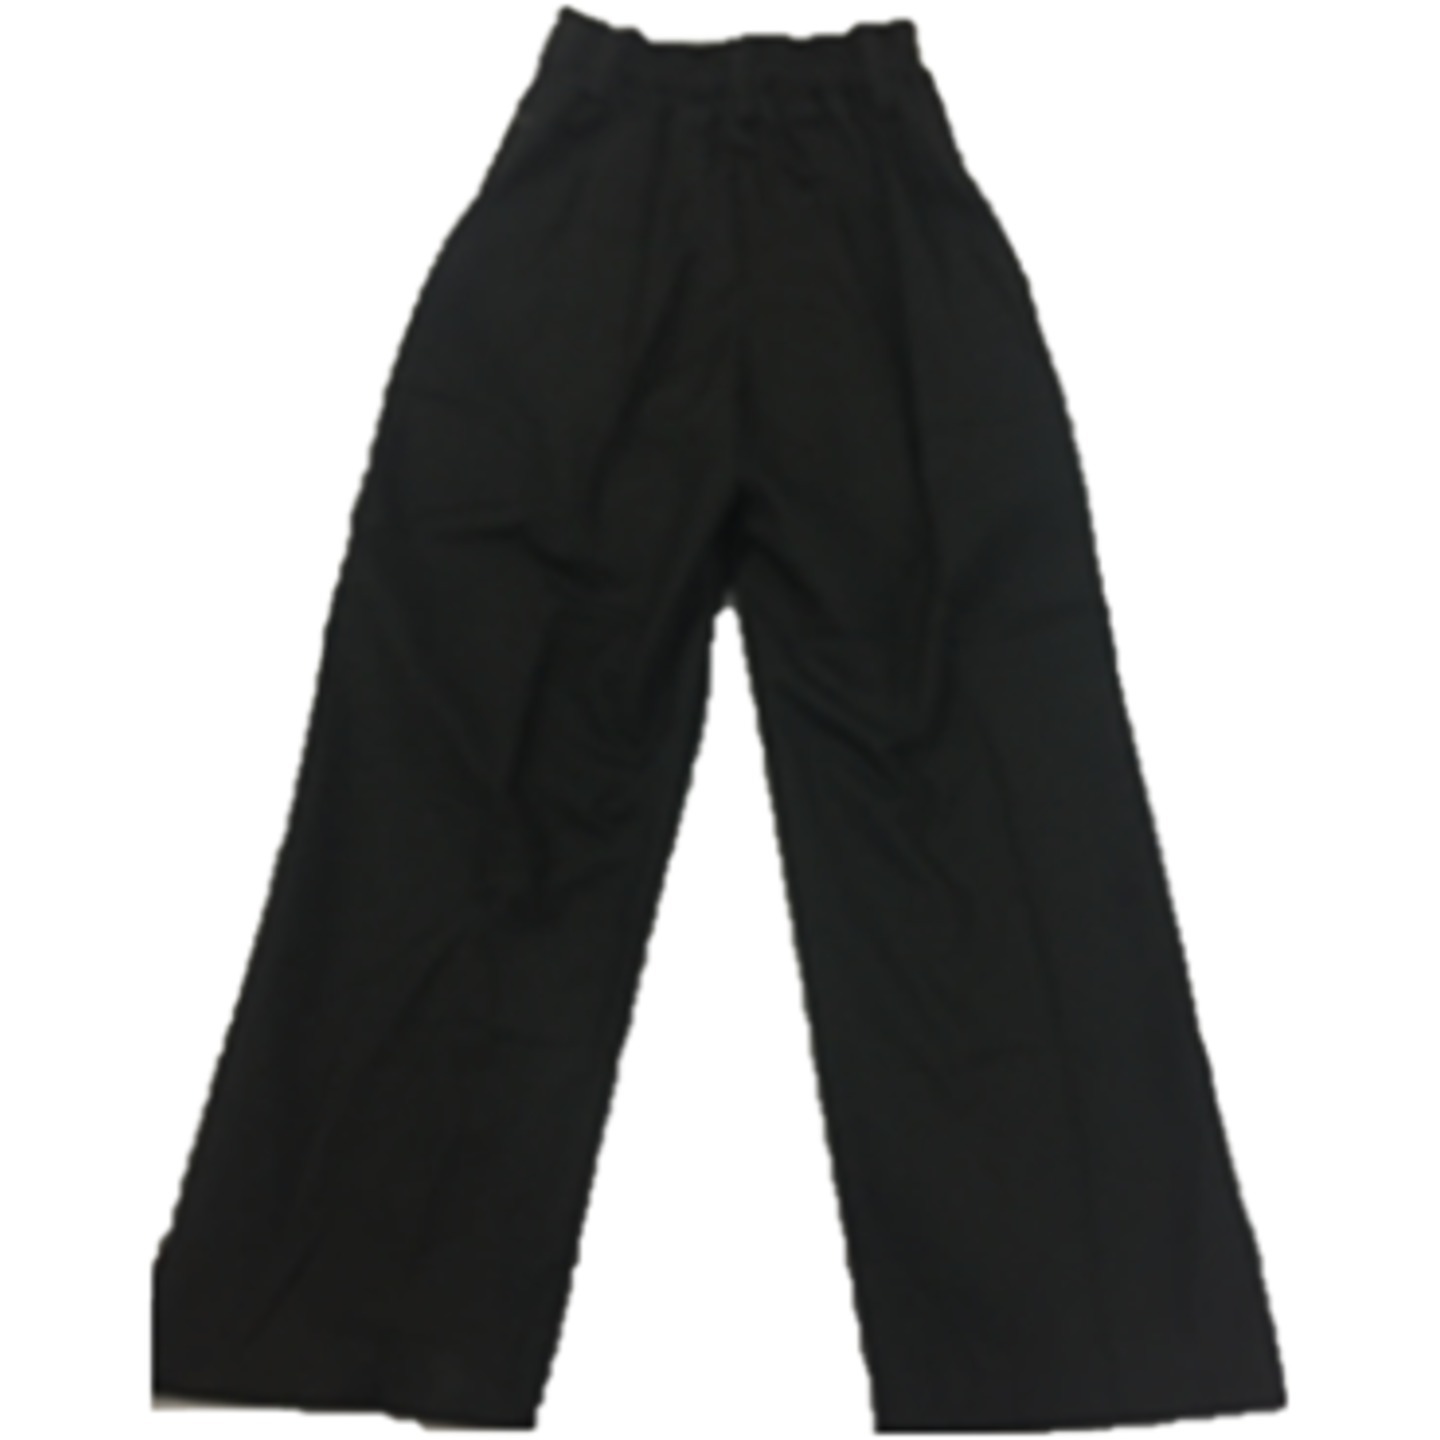 Unisex Black Pants